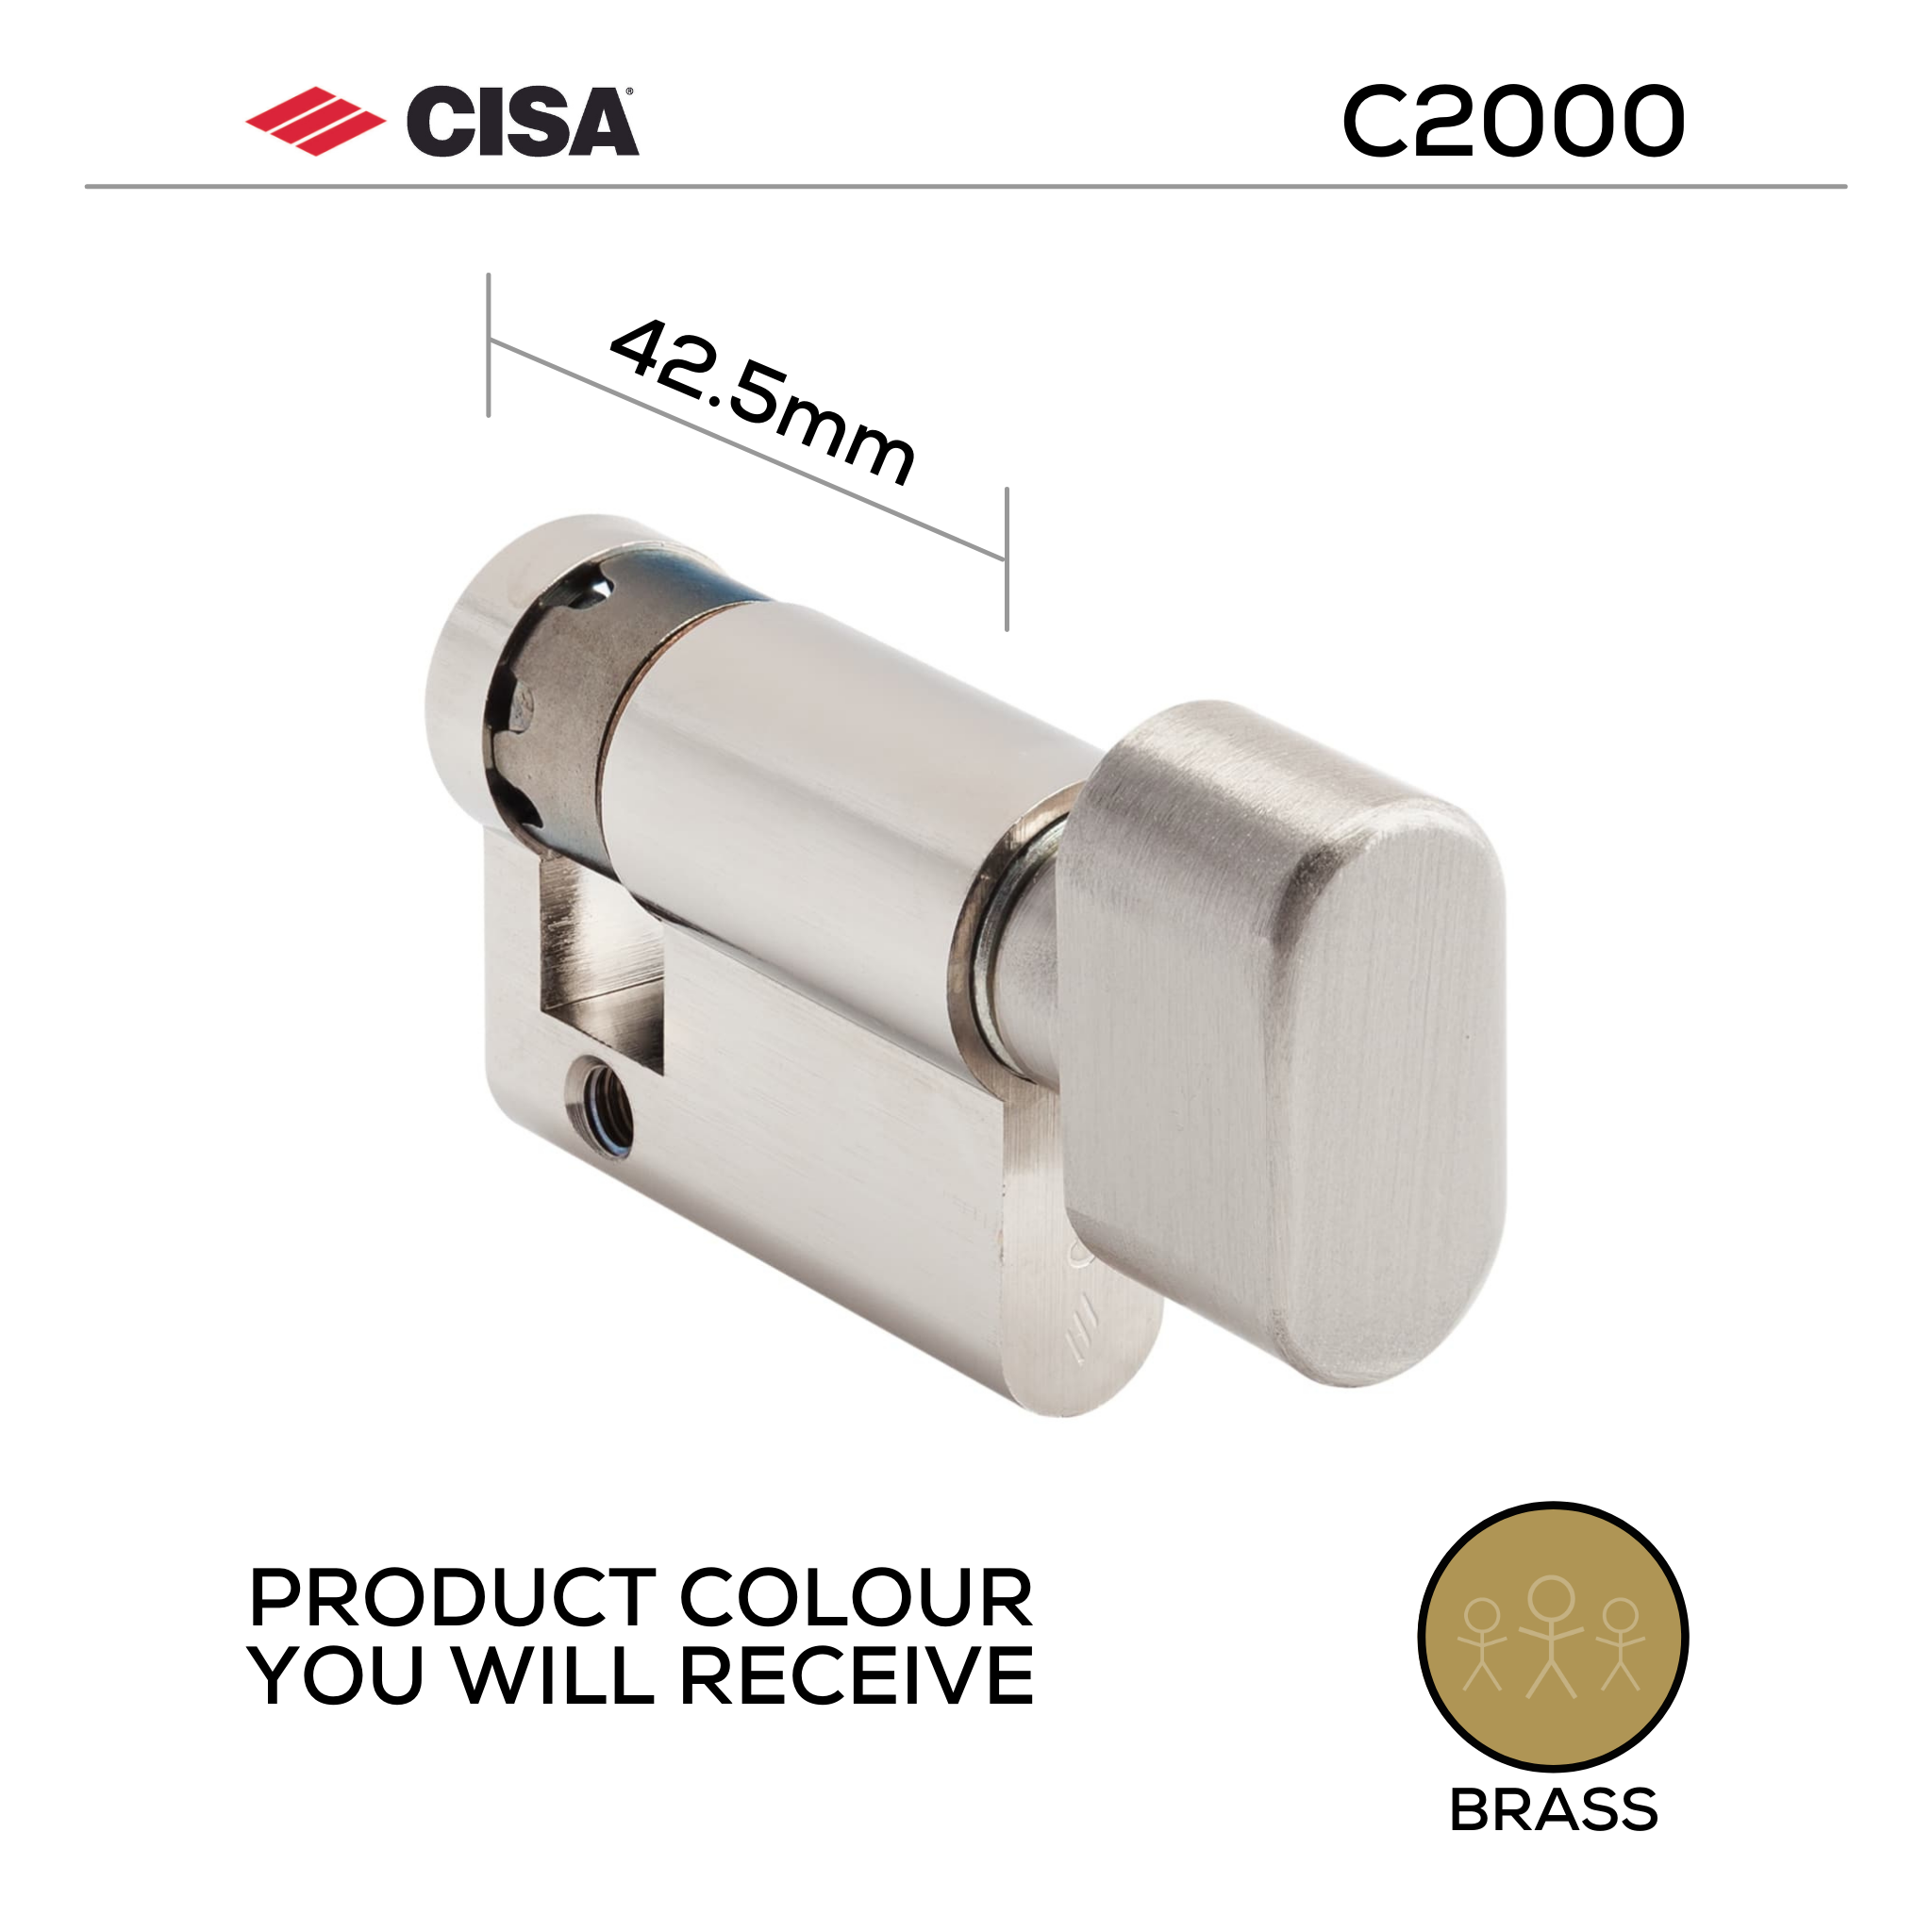 08559-09-00-KD, 42,5mm - 32.5/10, Half (Single Cylinder), C2000, Thumbturn, Keyed to Differ (Standard), Brass, CISA